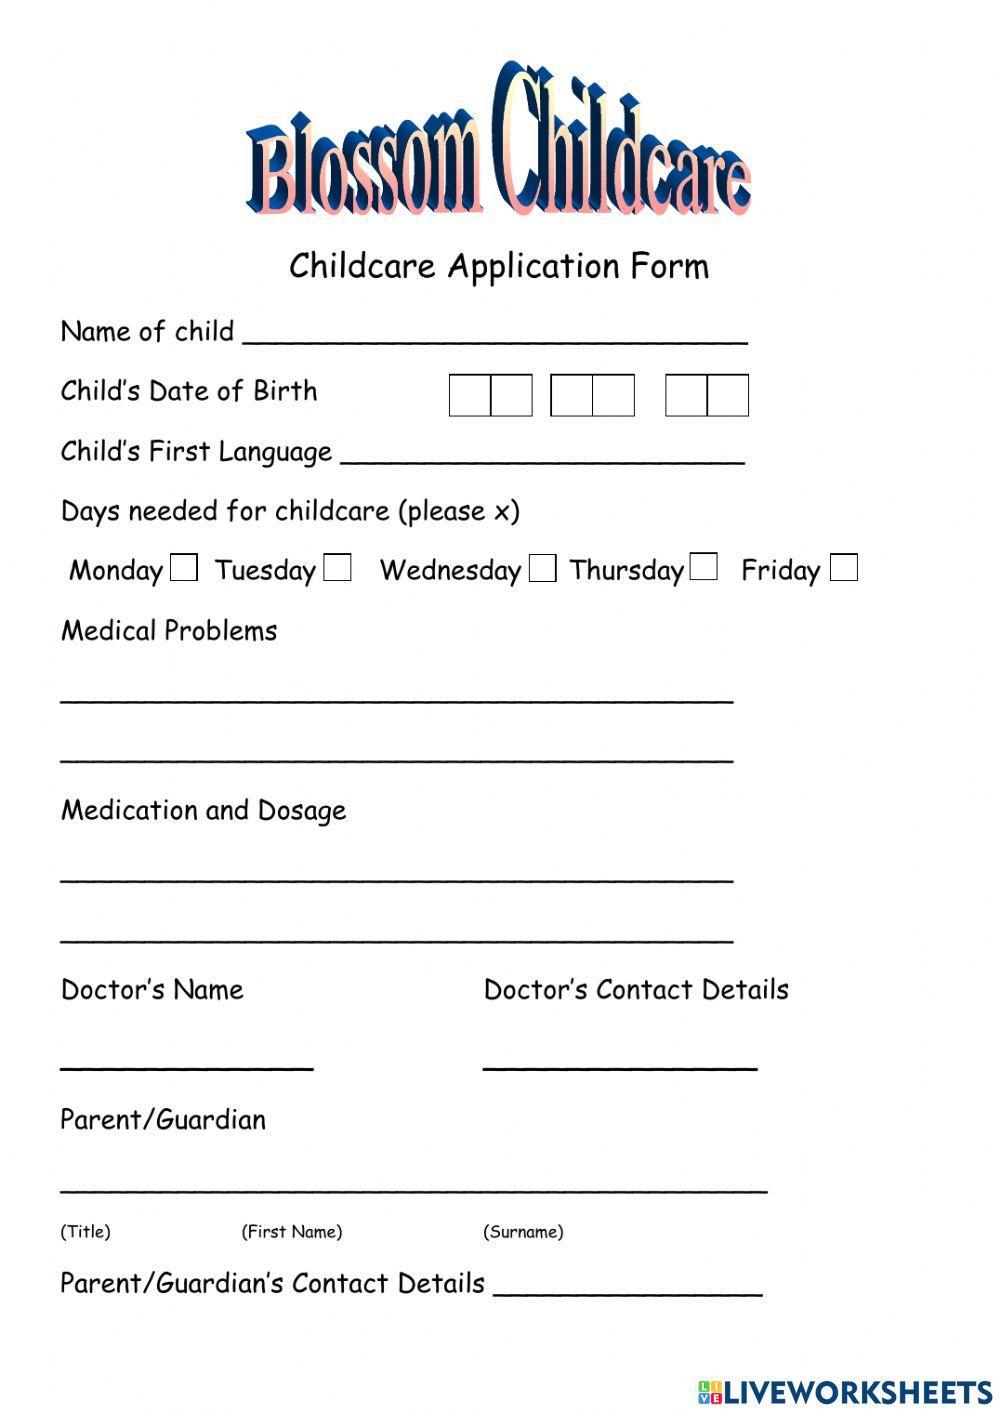 Childcare Application Form